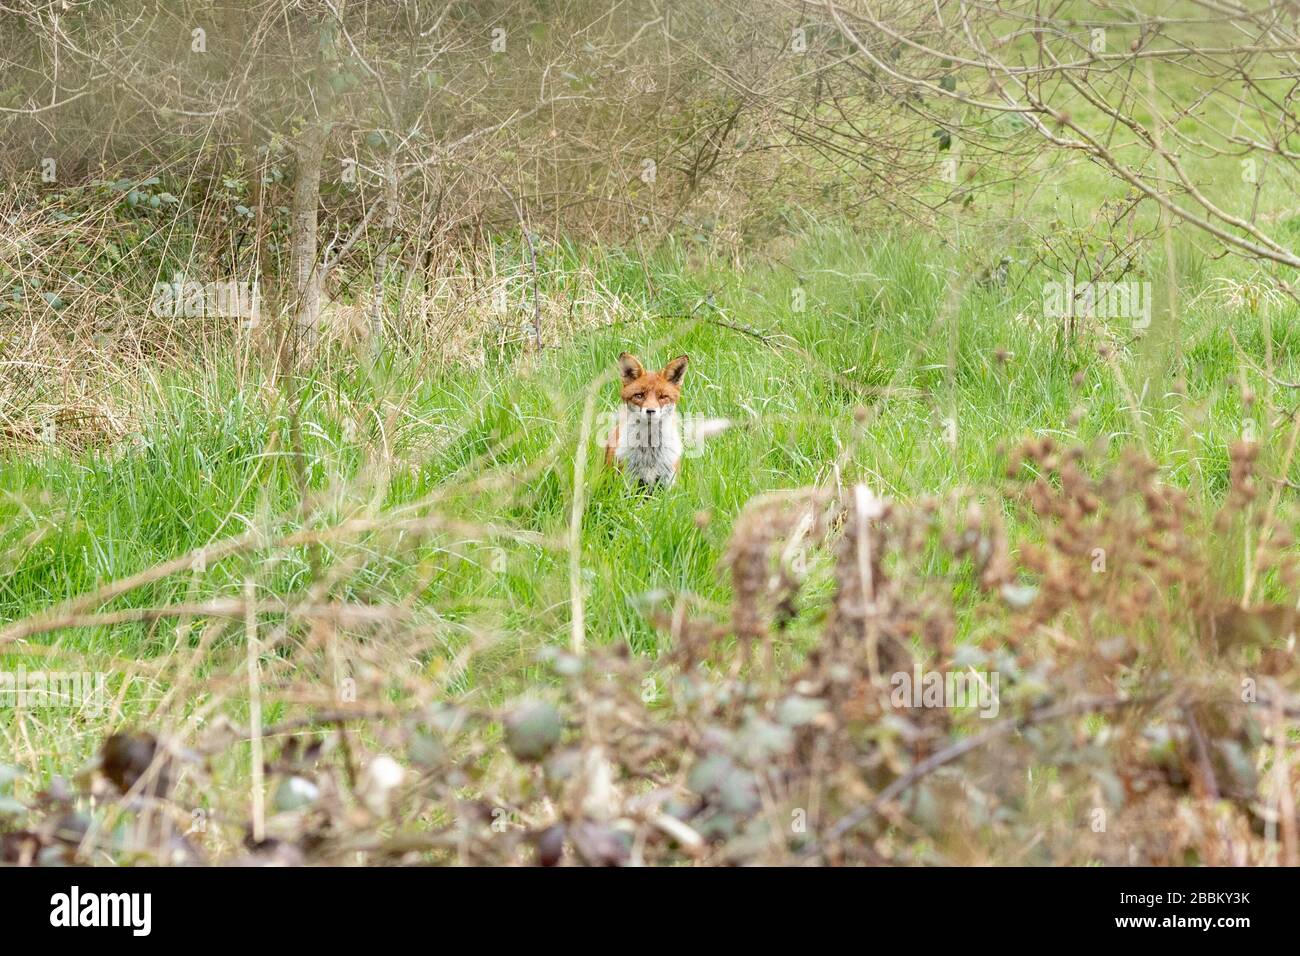 Fox sitting among grassland (Vulpes Vulpes), UK. Seeing more wildlife in local greenspace during the coronavirus covid-19 pandemic lockdown. Stock Photo